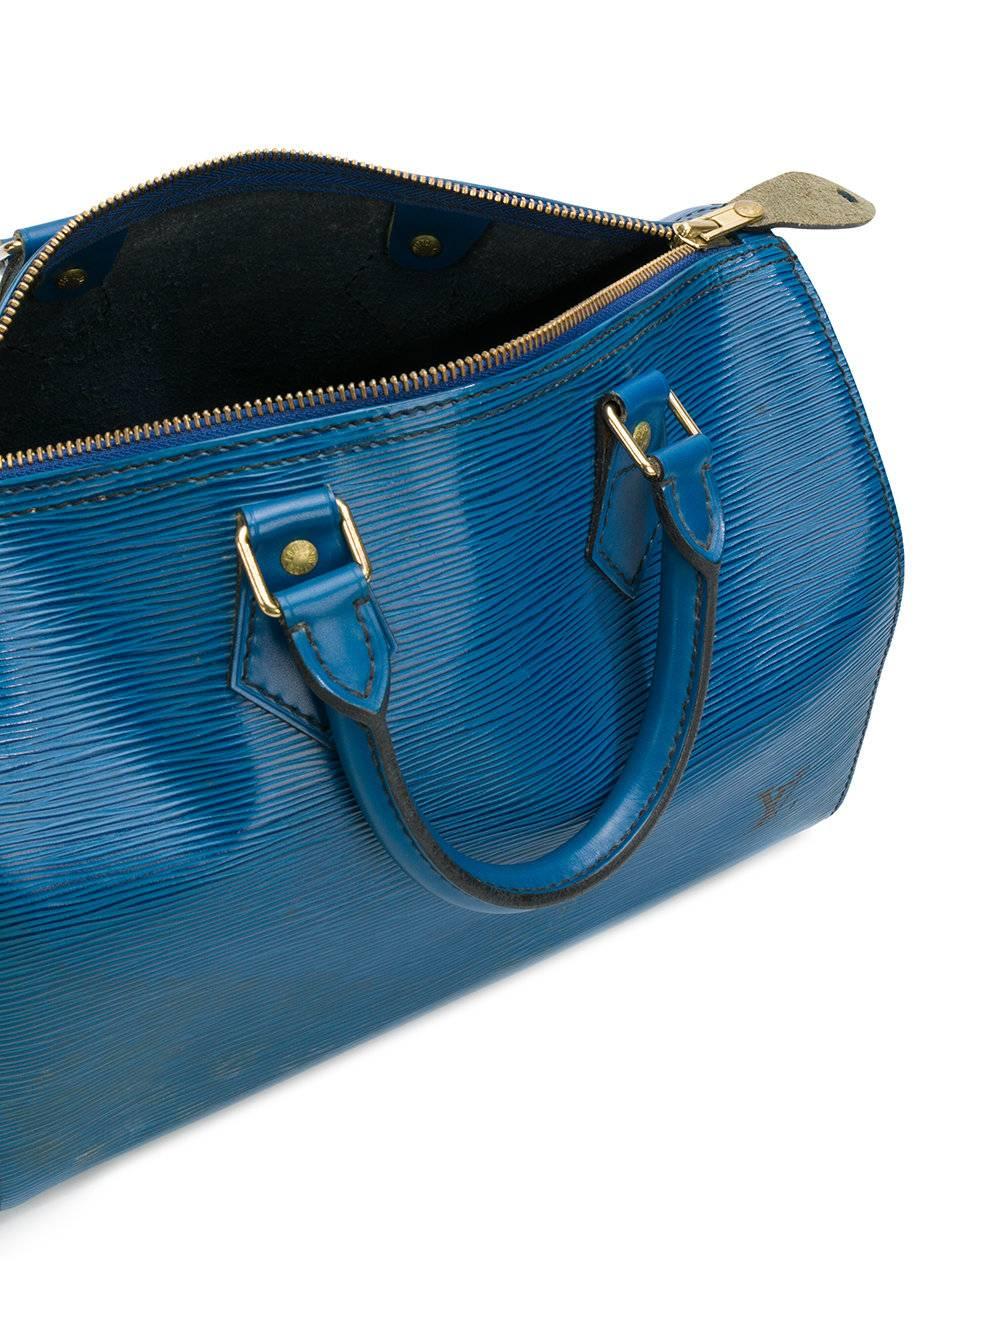 Blue Louis Vuitton Epi Textured Tote Bag